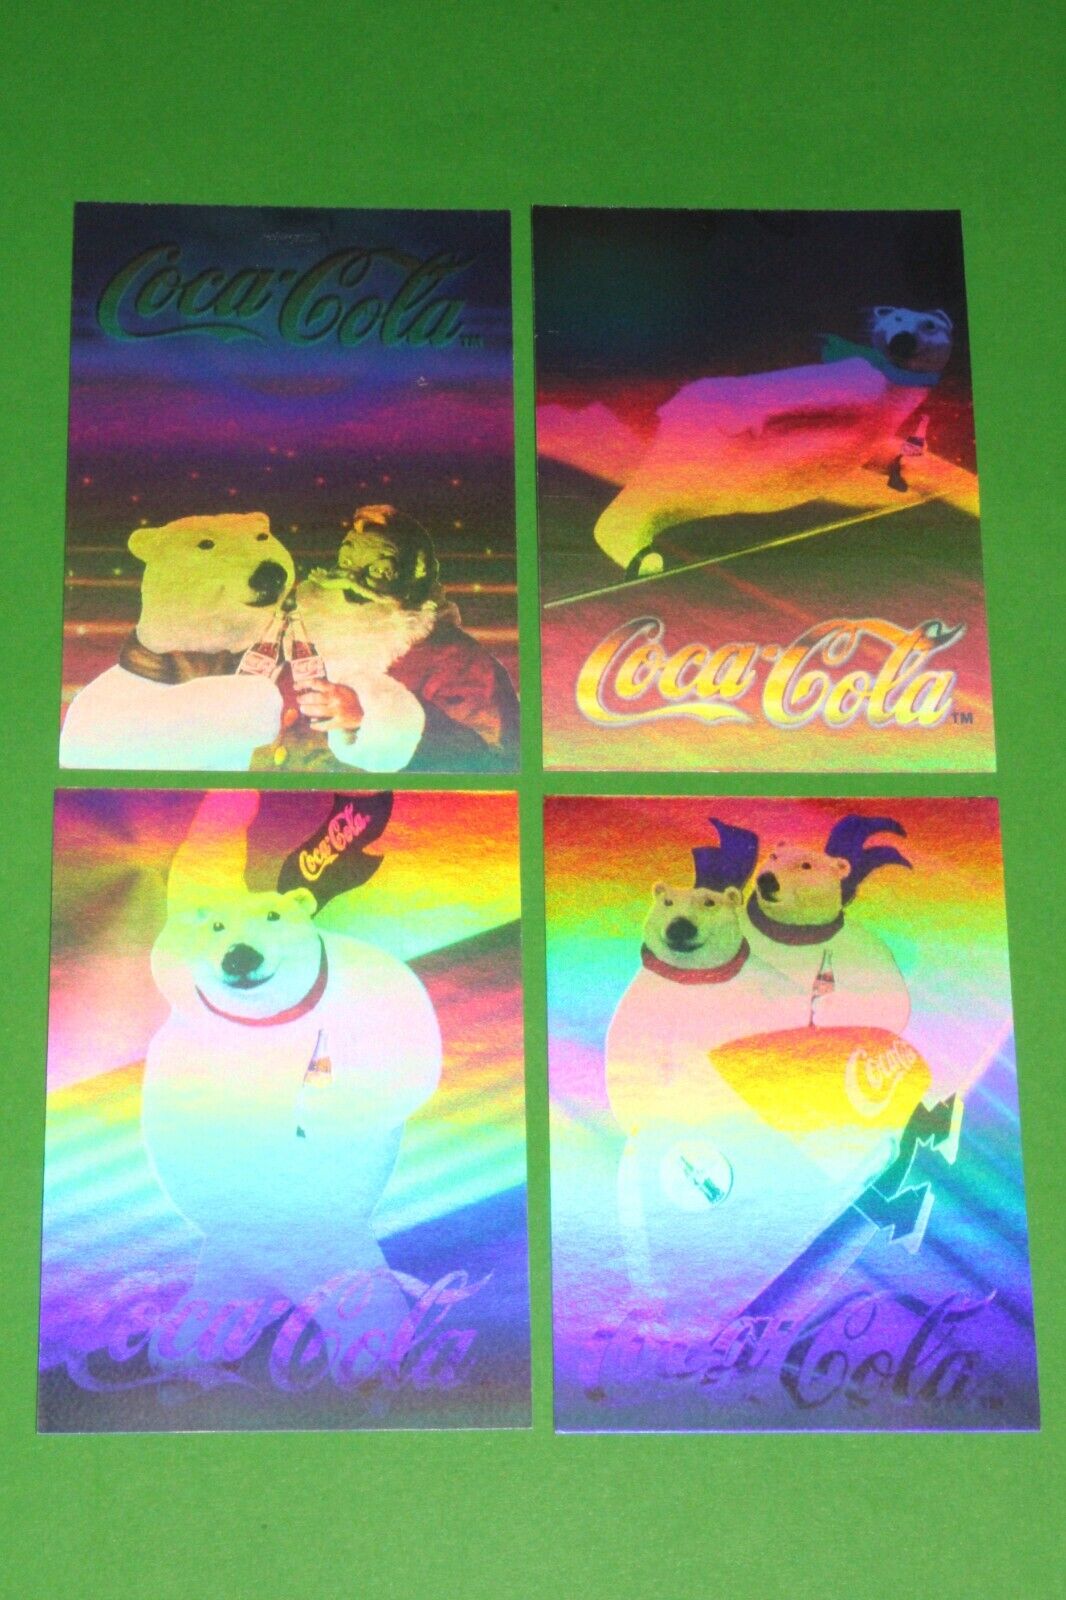 1995 COCA COLA SERIES 3 INSERT POLAR BEAR HOLOGRAM 4 CARD SET COLLECT-A-CARD